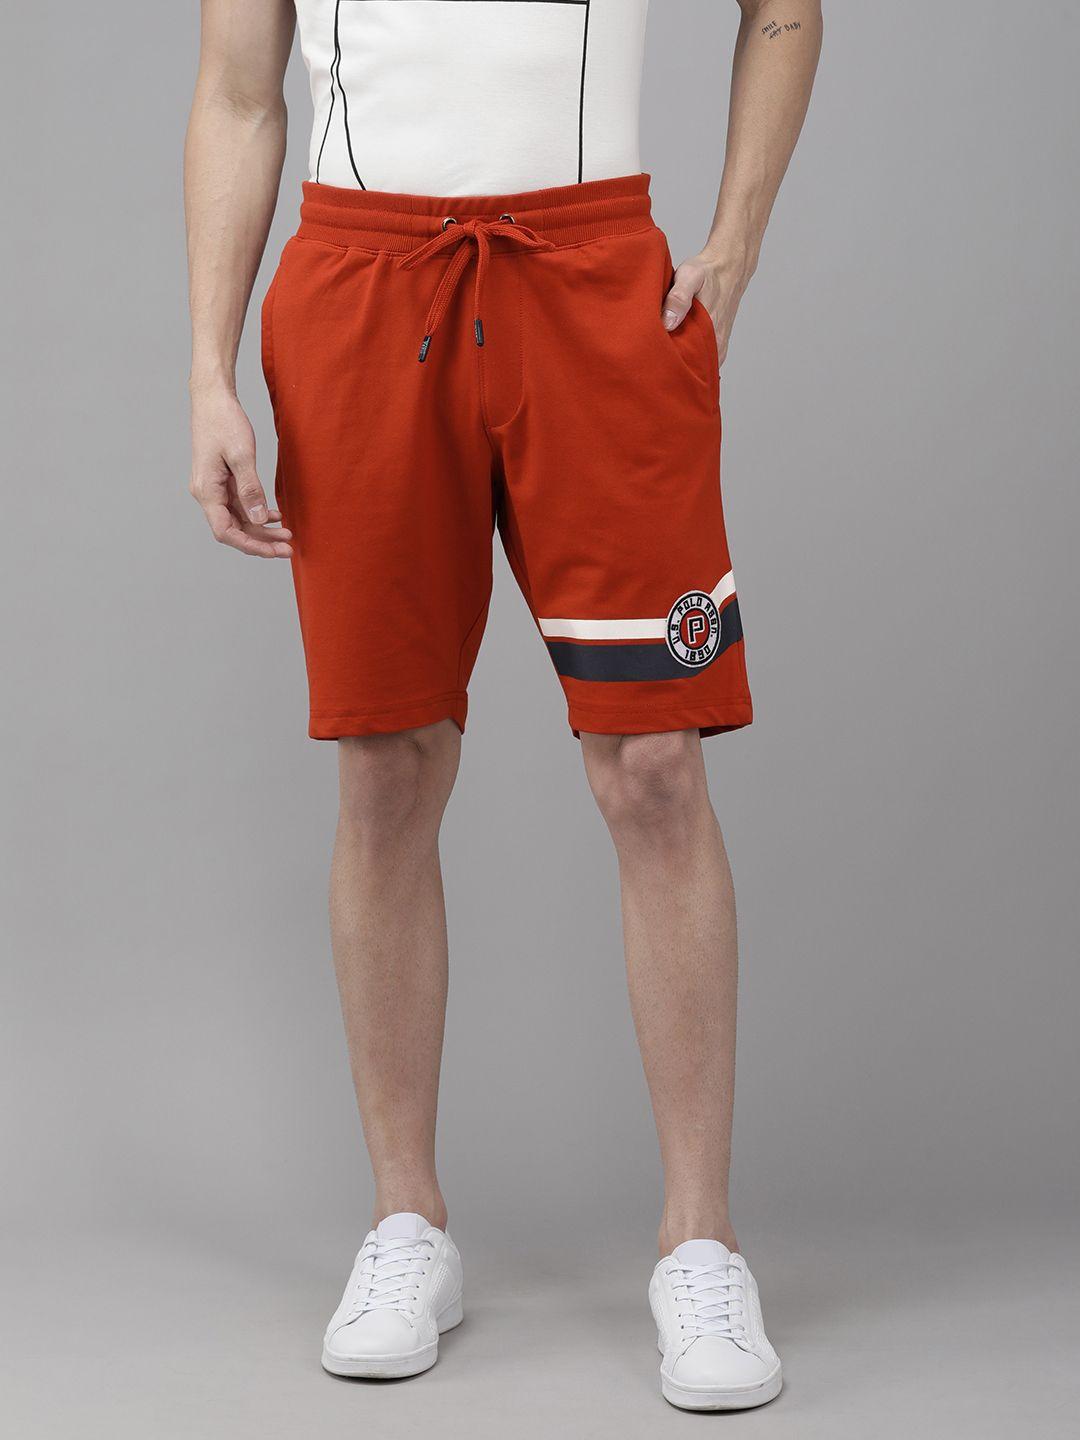 u-s-polo-assn-denim-co-men-red-brand-logo-printed-applique-printed-shorts